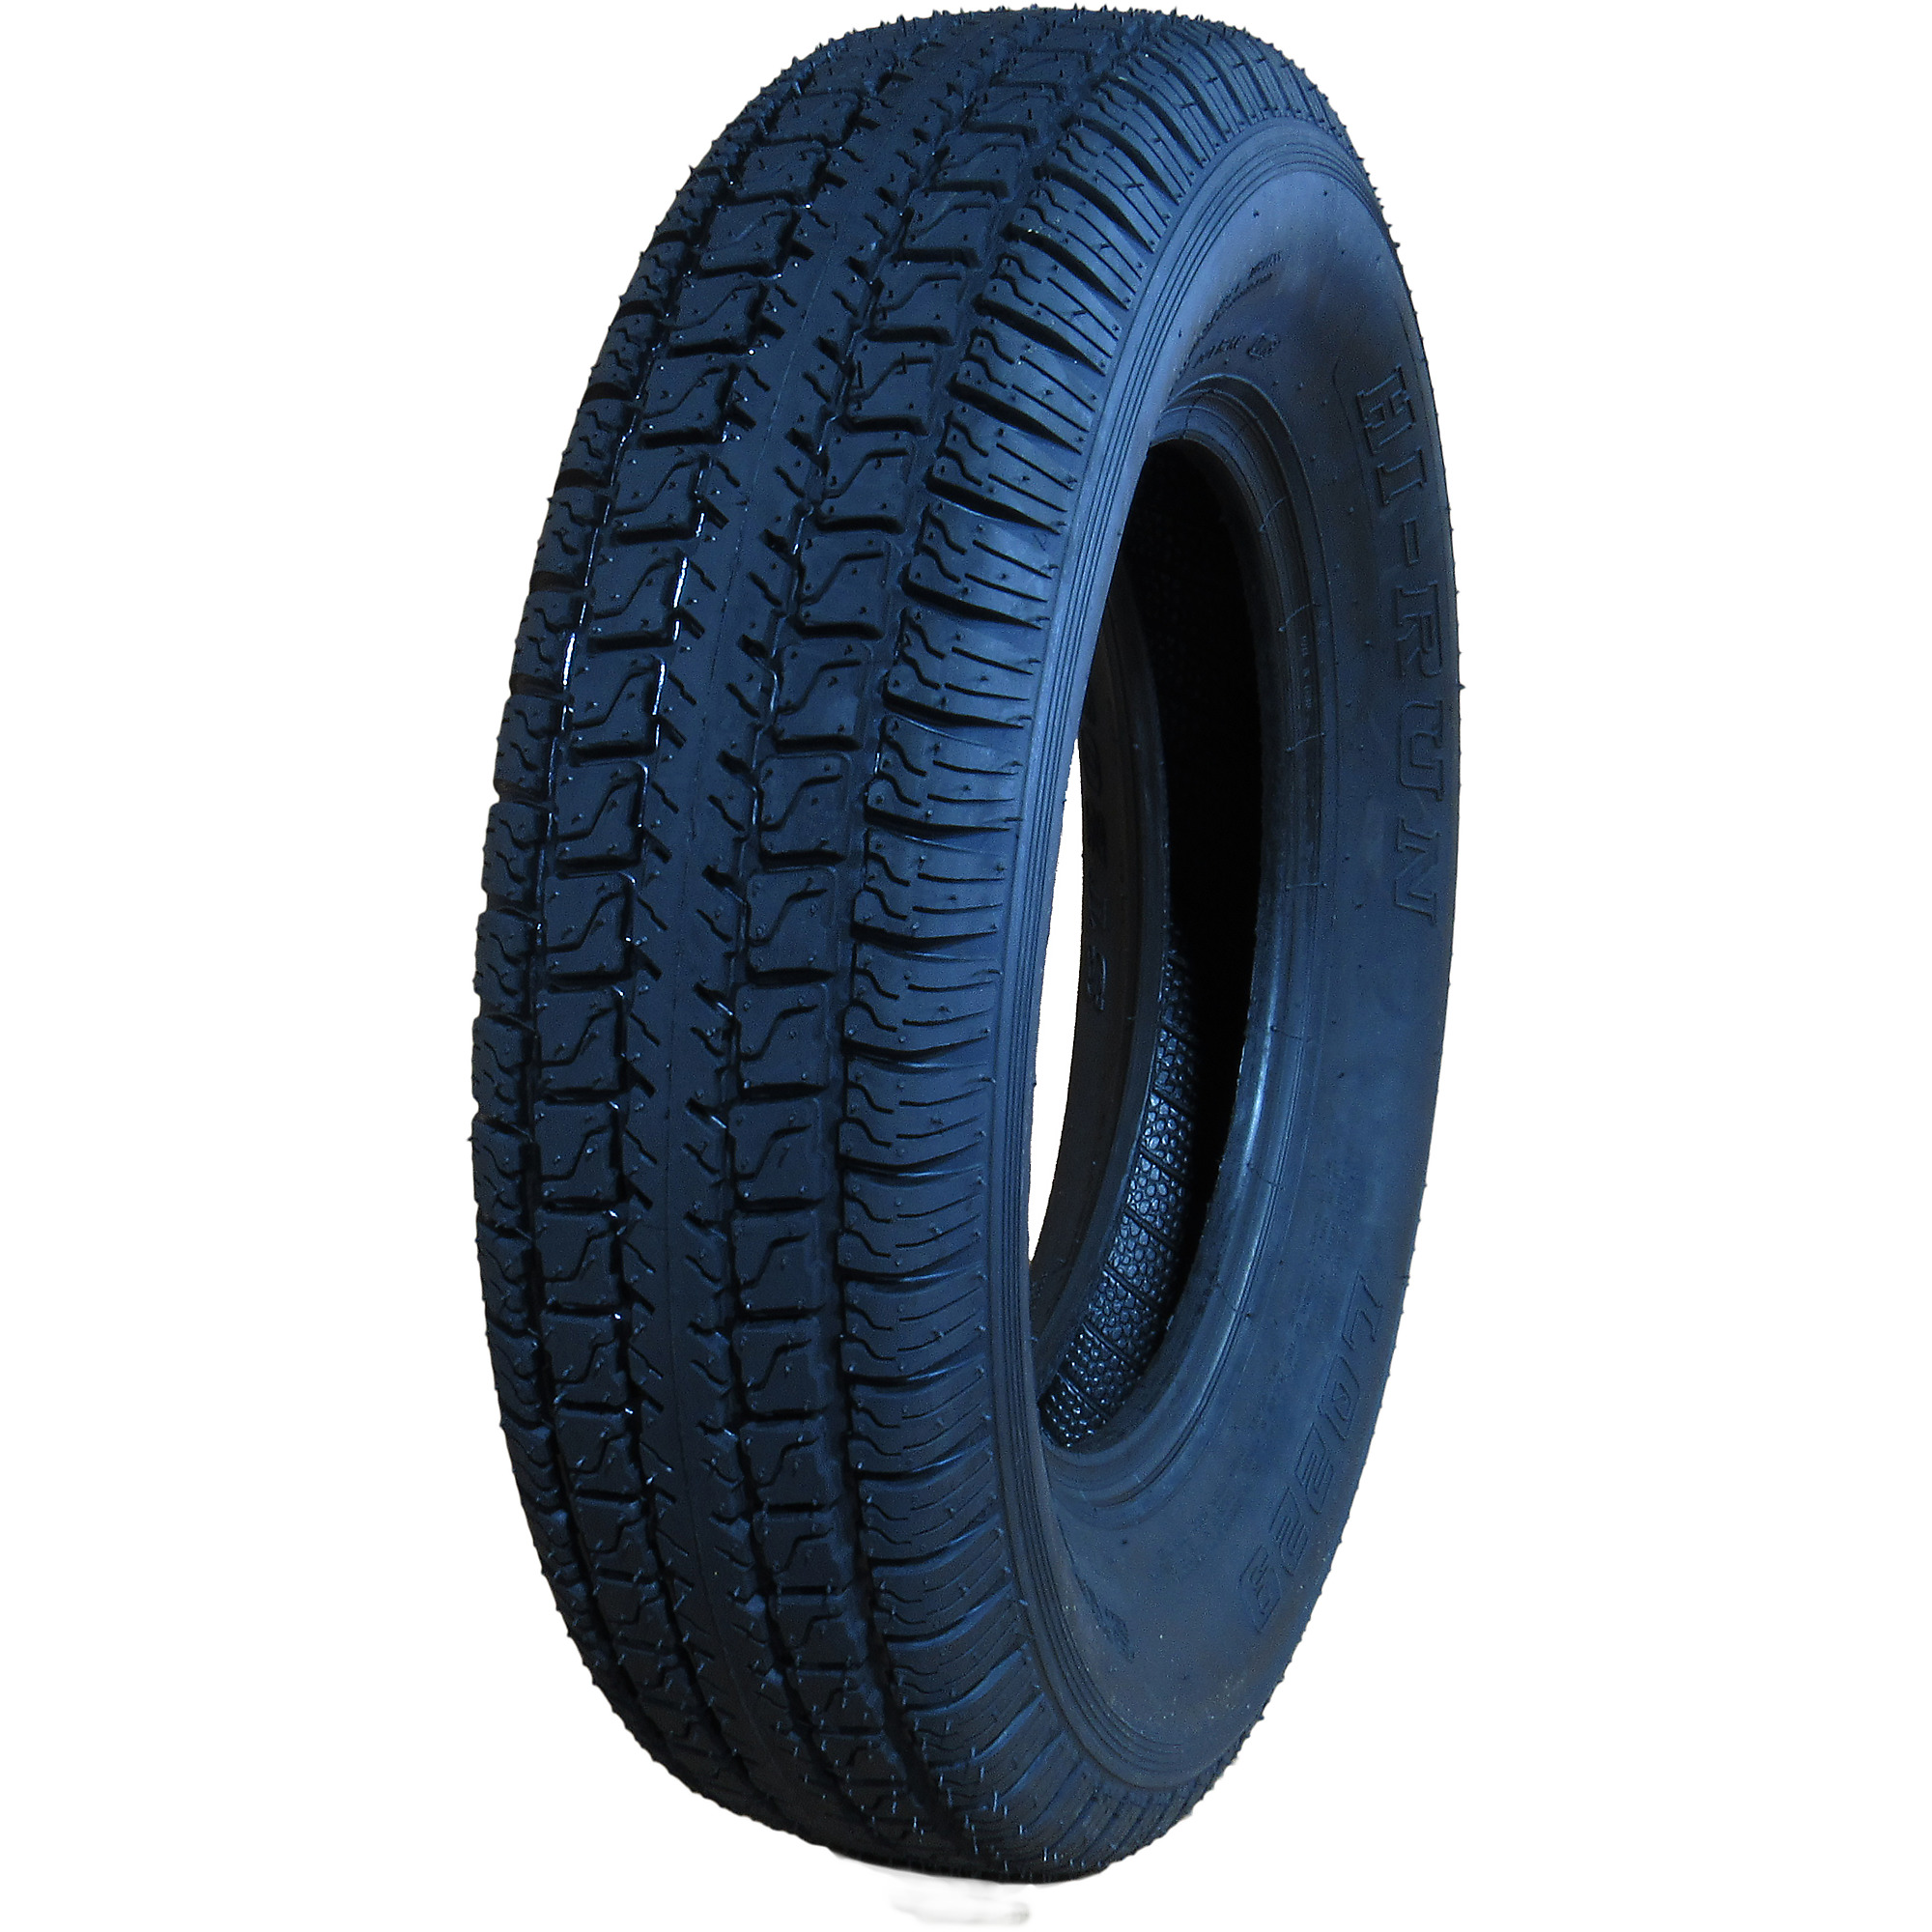 HI-RUN, Highway Trailer Tire, Bias-ply, Tire Size ST215/75D14 Load Range Rating C, Model LZ1005